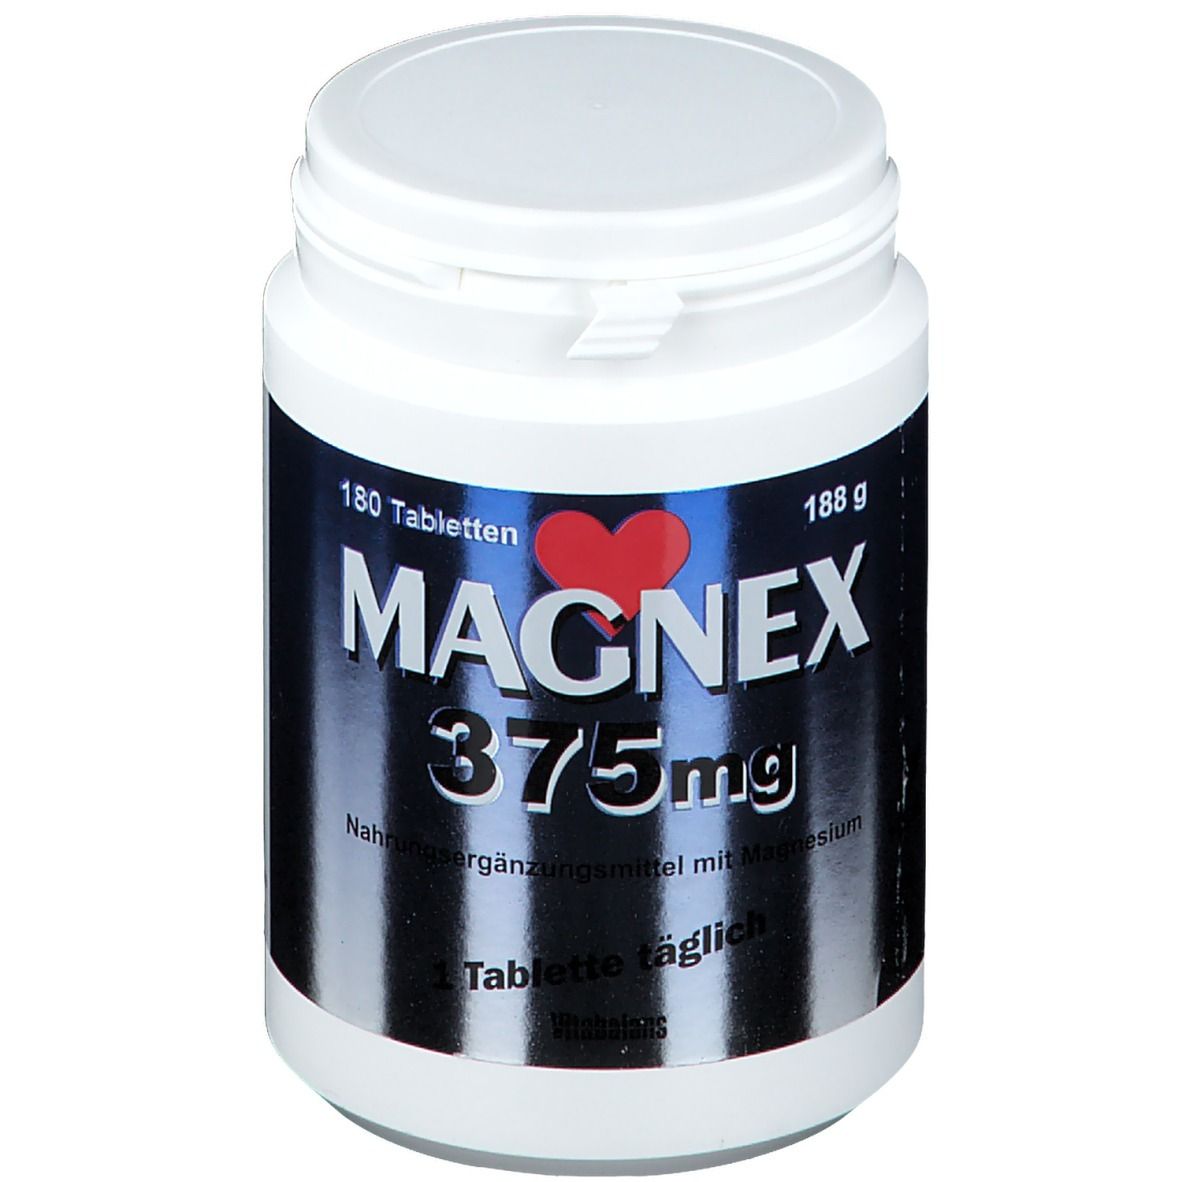 Magnex 375 mg